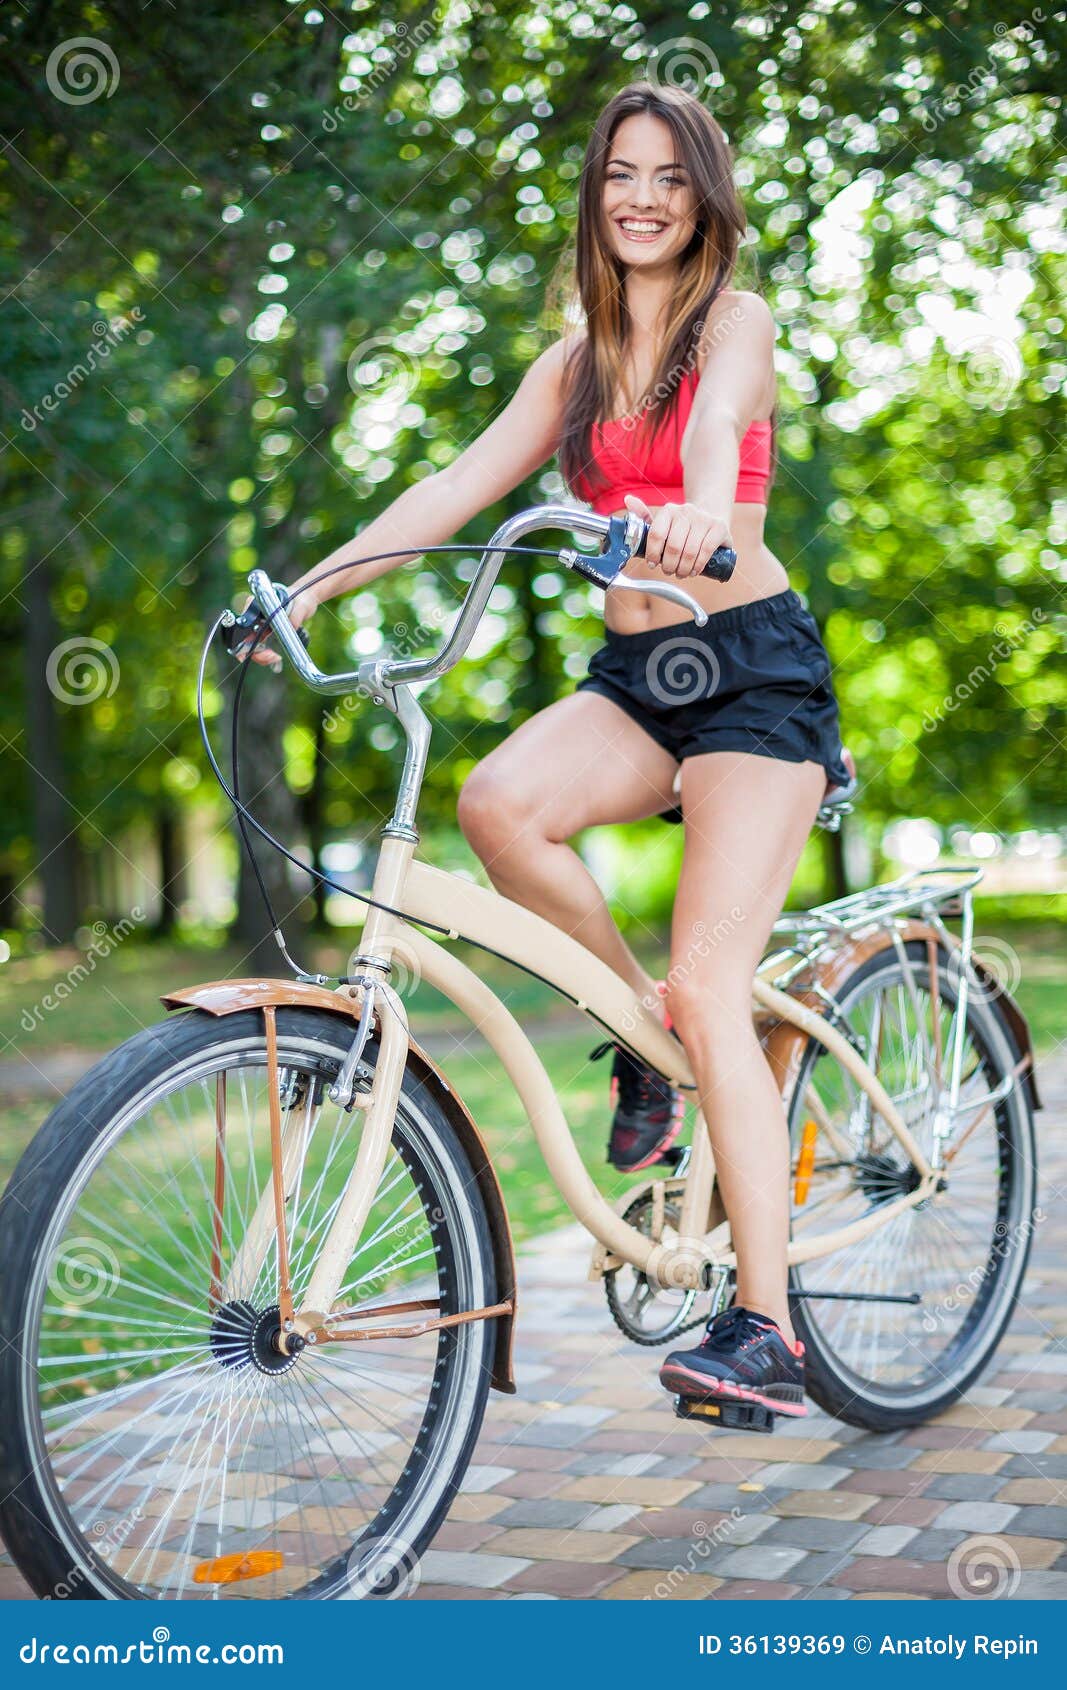 jolie fille a bicyclette belle fesse